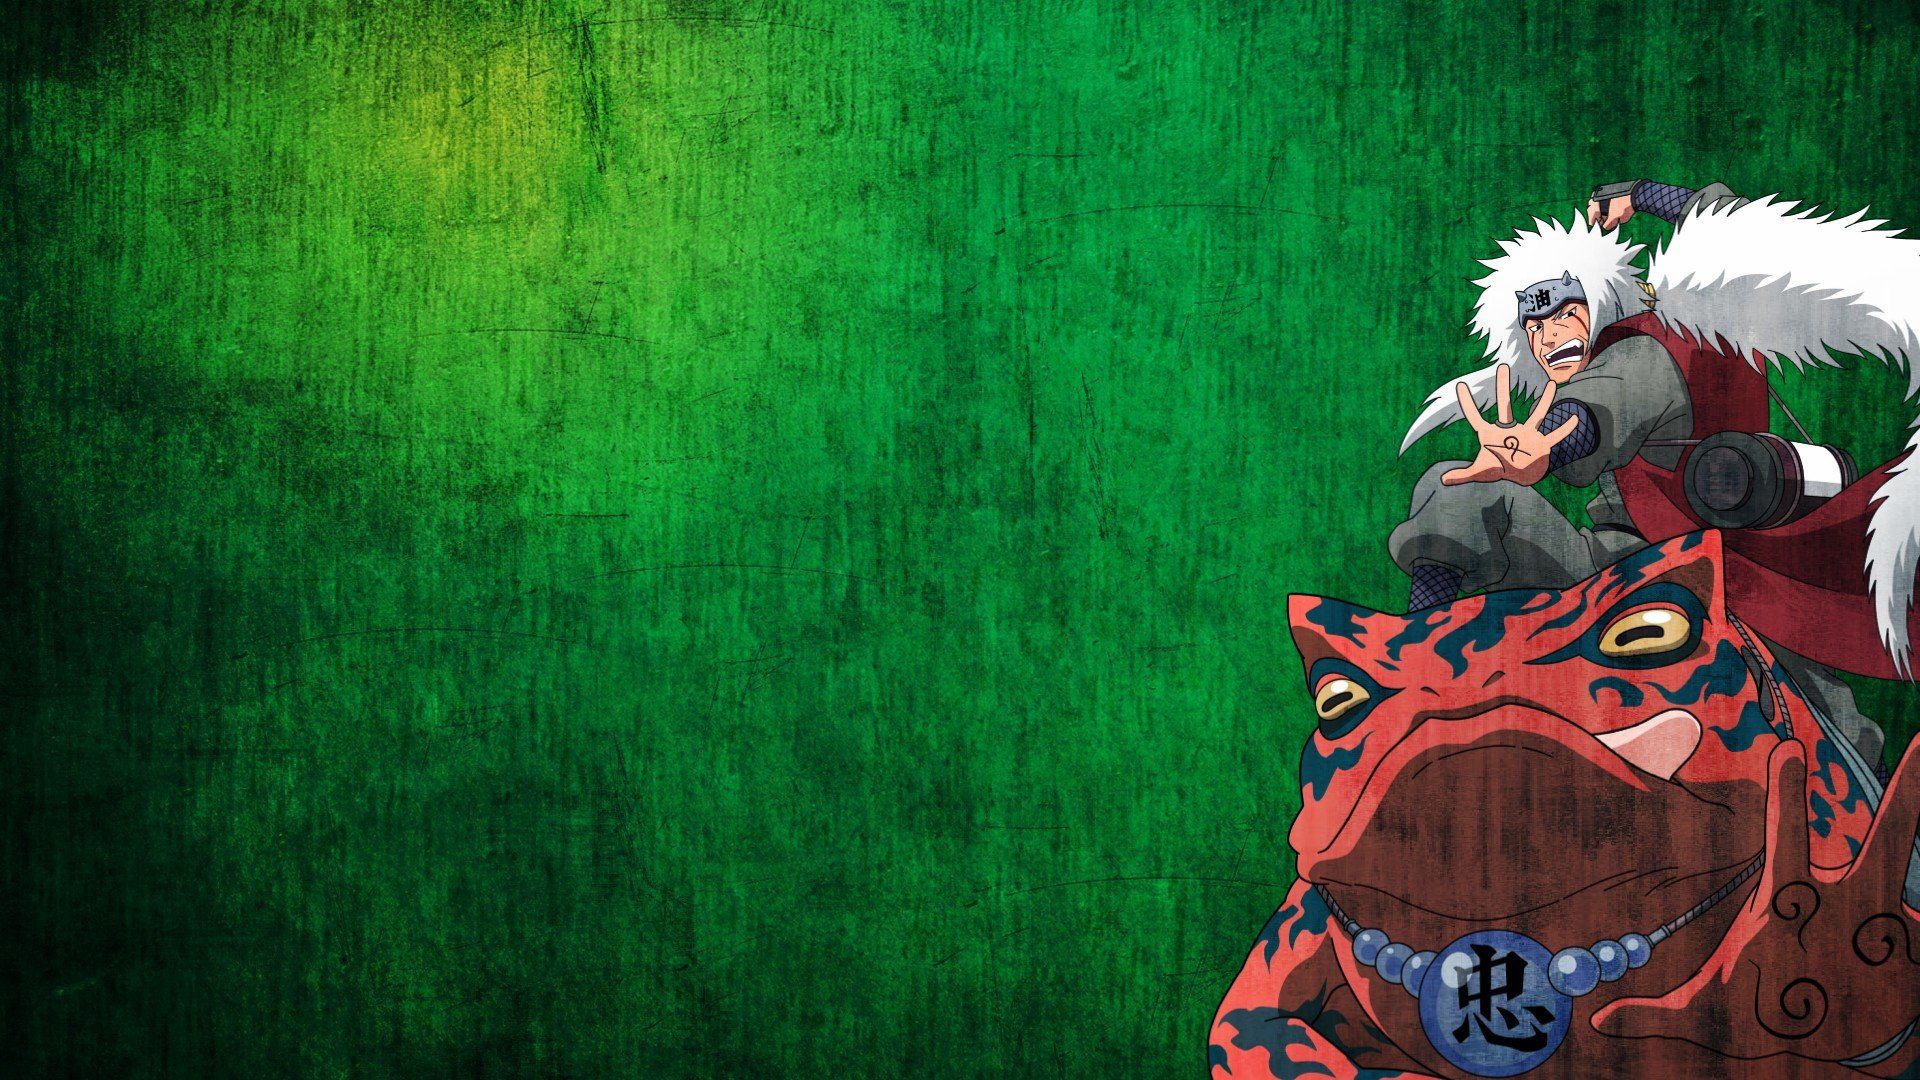 Jiraiya Background. Naruto Jiraiya Wallpaper, Jiraiya Wallpaper and Jiraiya Rasengan Wallpaper